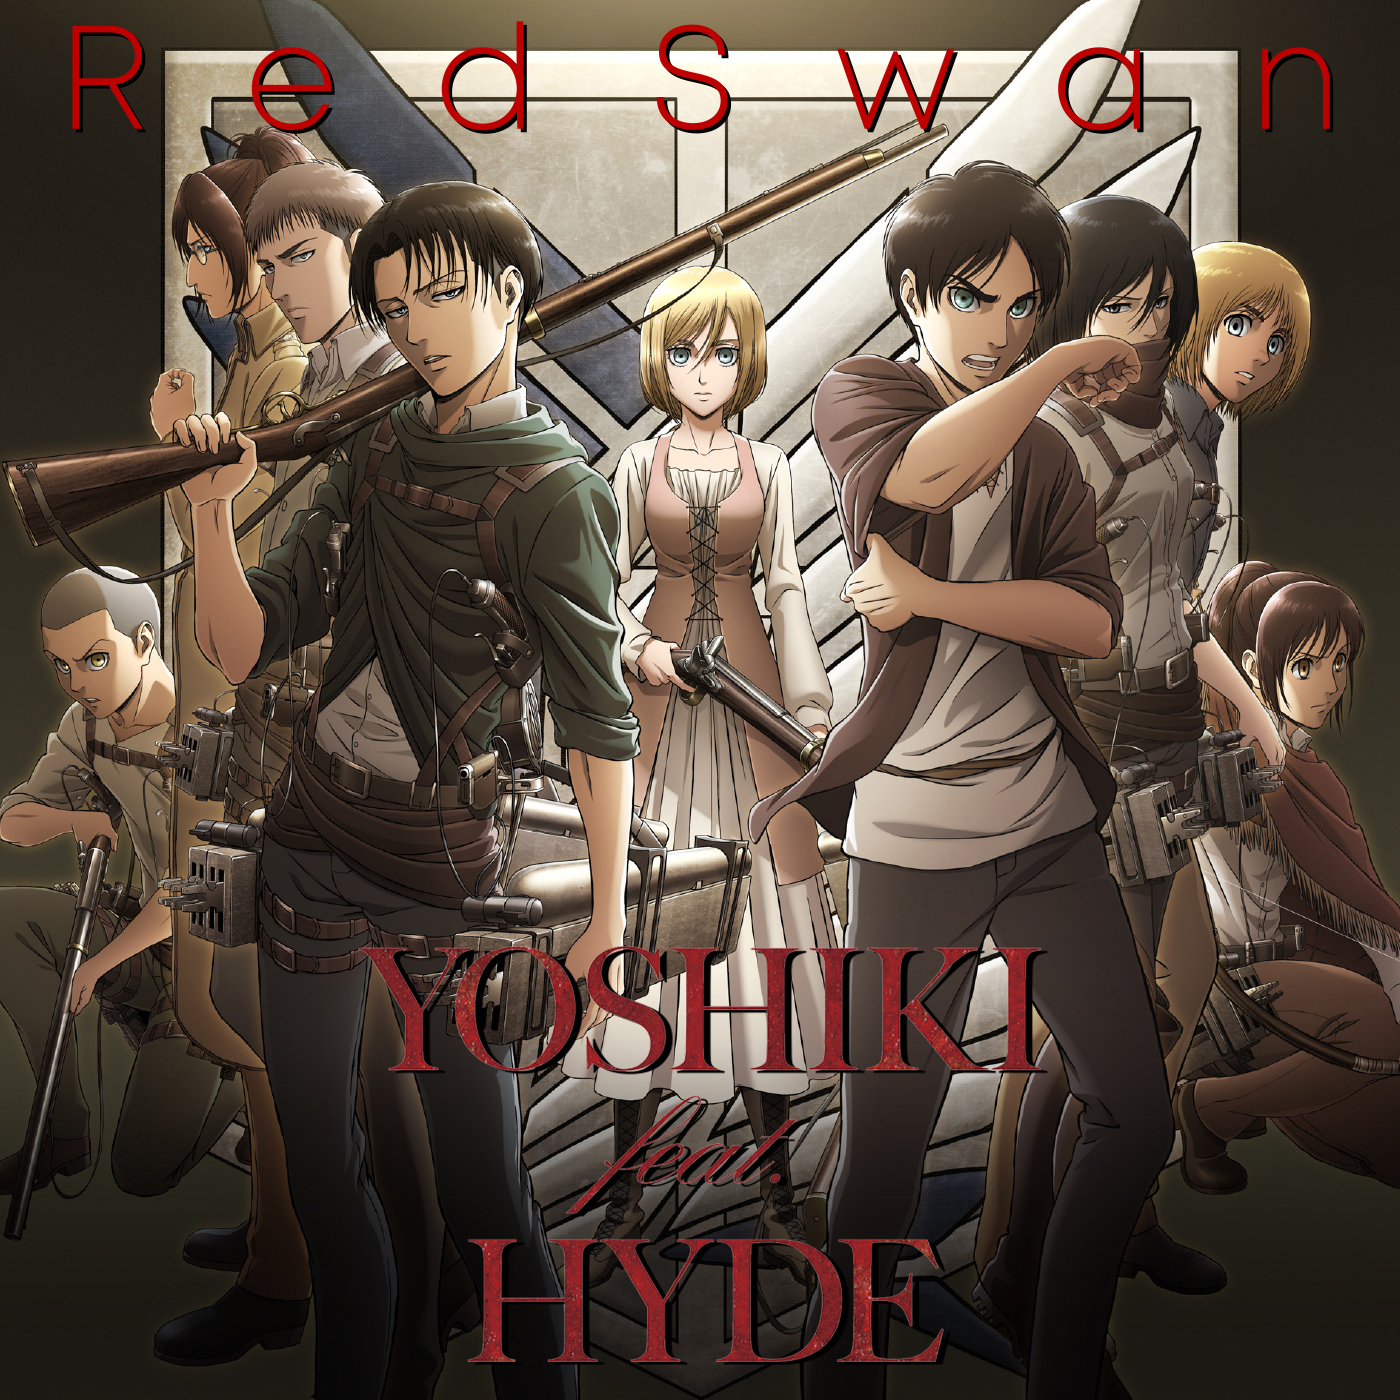 Tvアニメ 進撃の巨人 オープニングテーマ Red Swan アーティスト名は Yoshiki Feat Hyde に正式決定 Yoshiki Pr事務局のプレスリリース